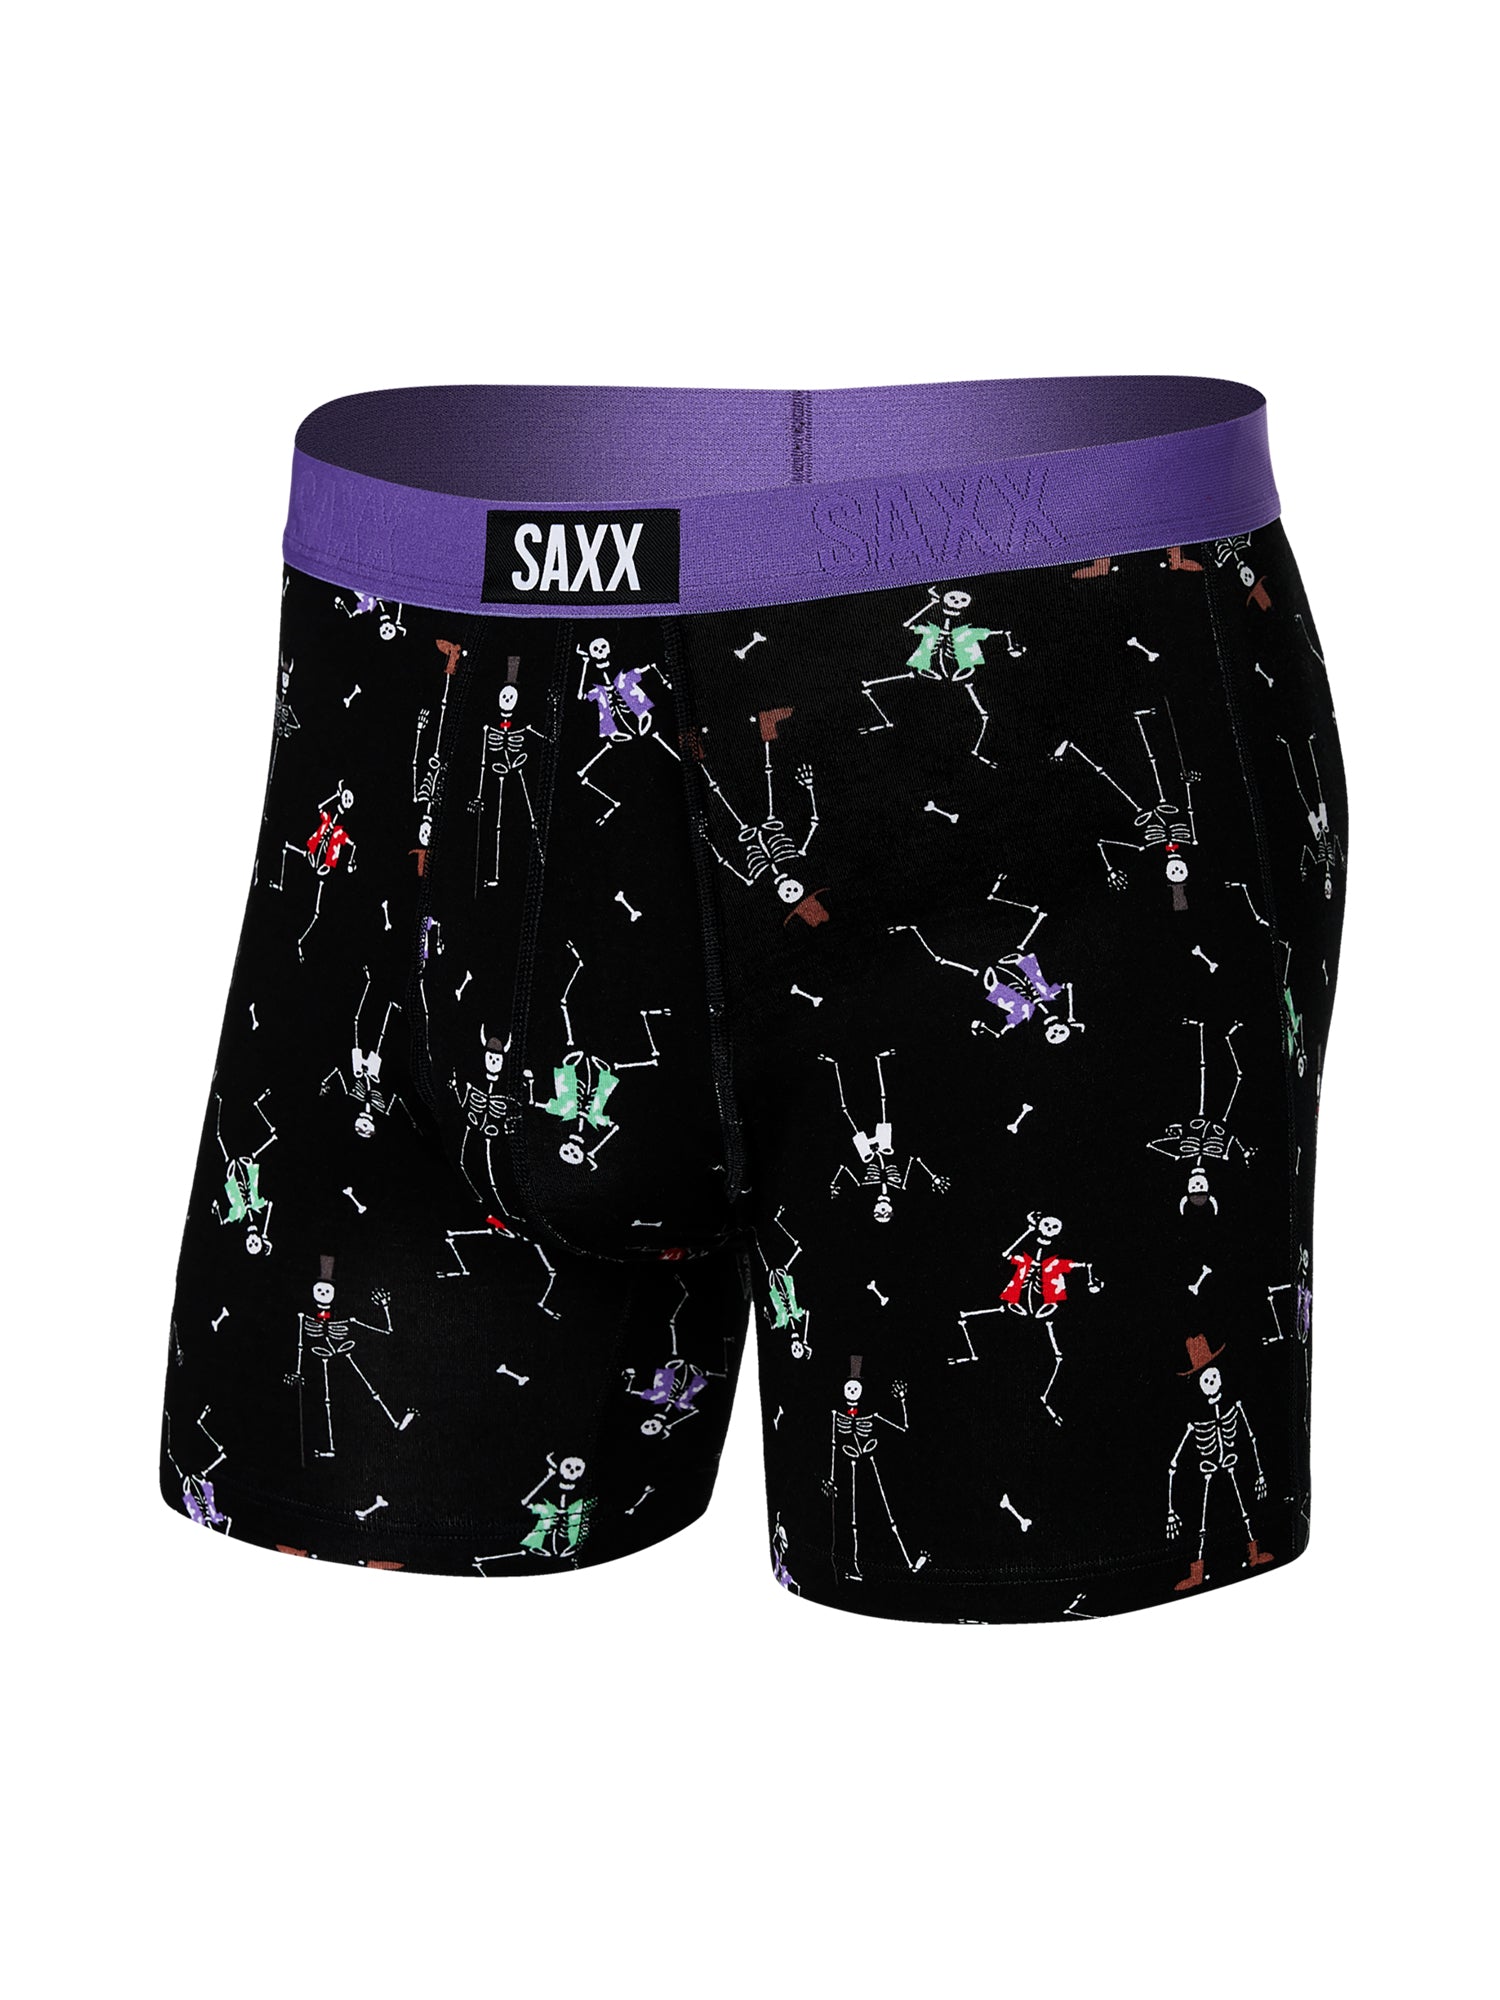 SAXX Vibe Underwear Review - InTheSnow